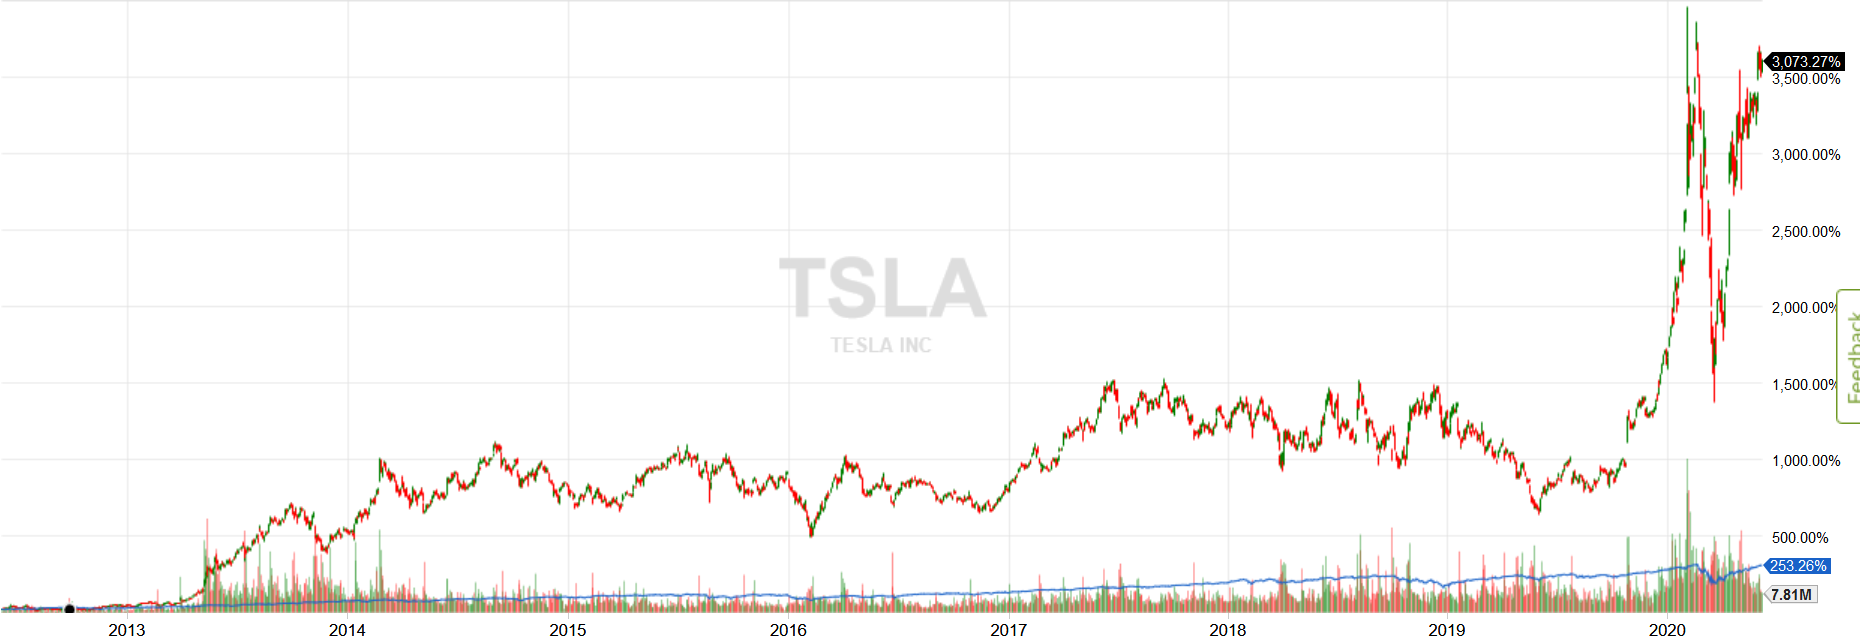 Screenshot_2020-06-06 TSLA Advanced Stock Charts - Fidelity Investments.png